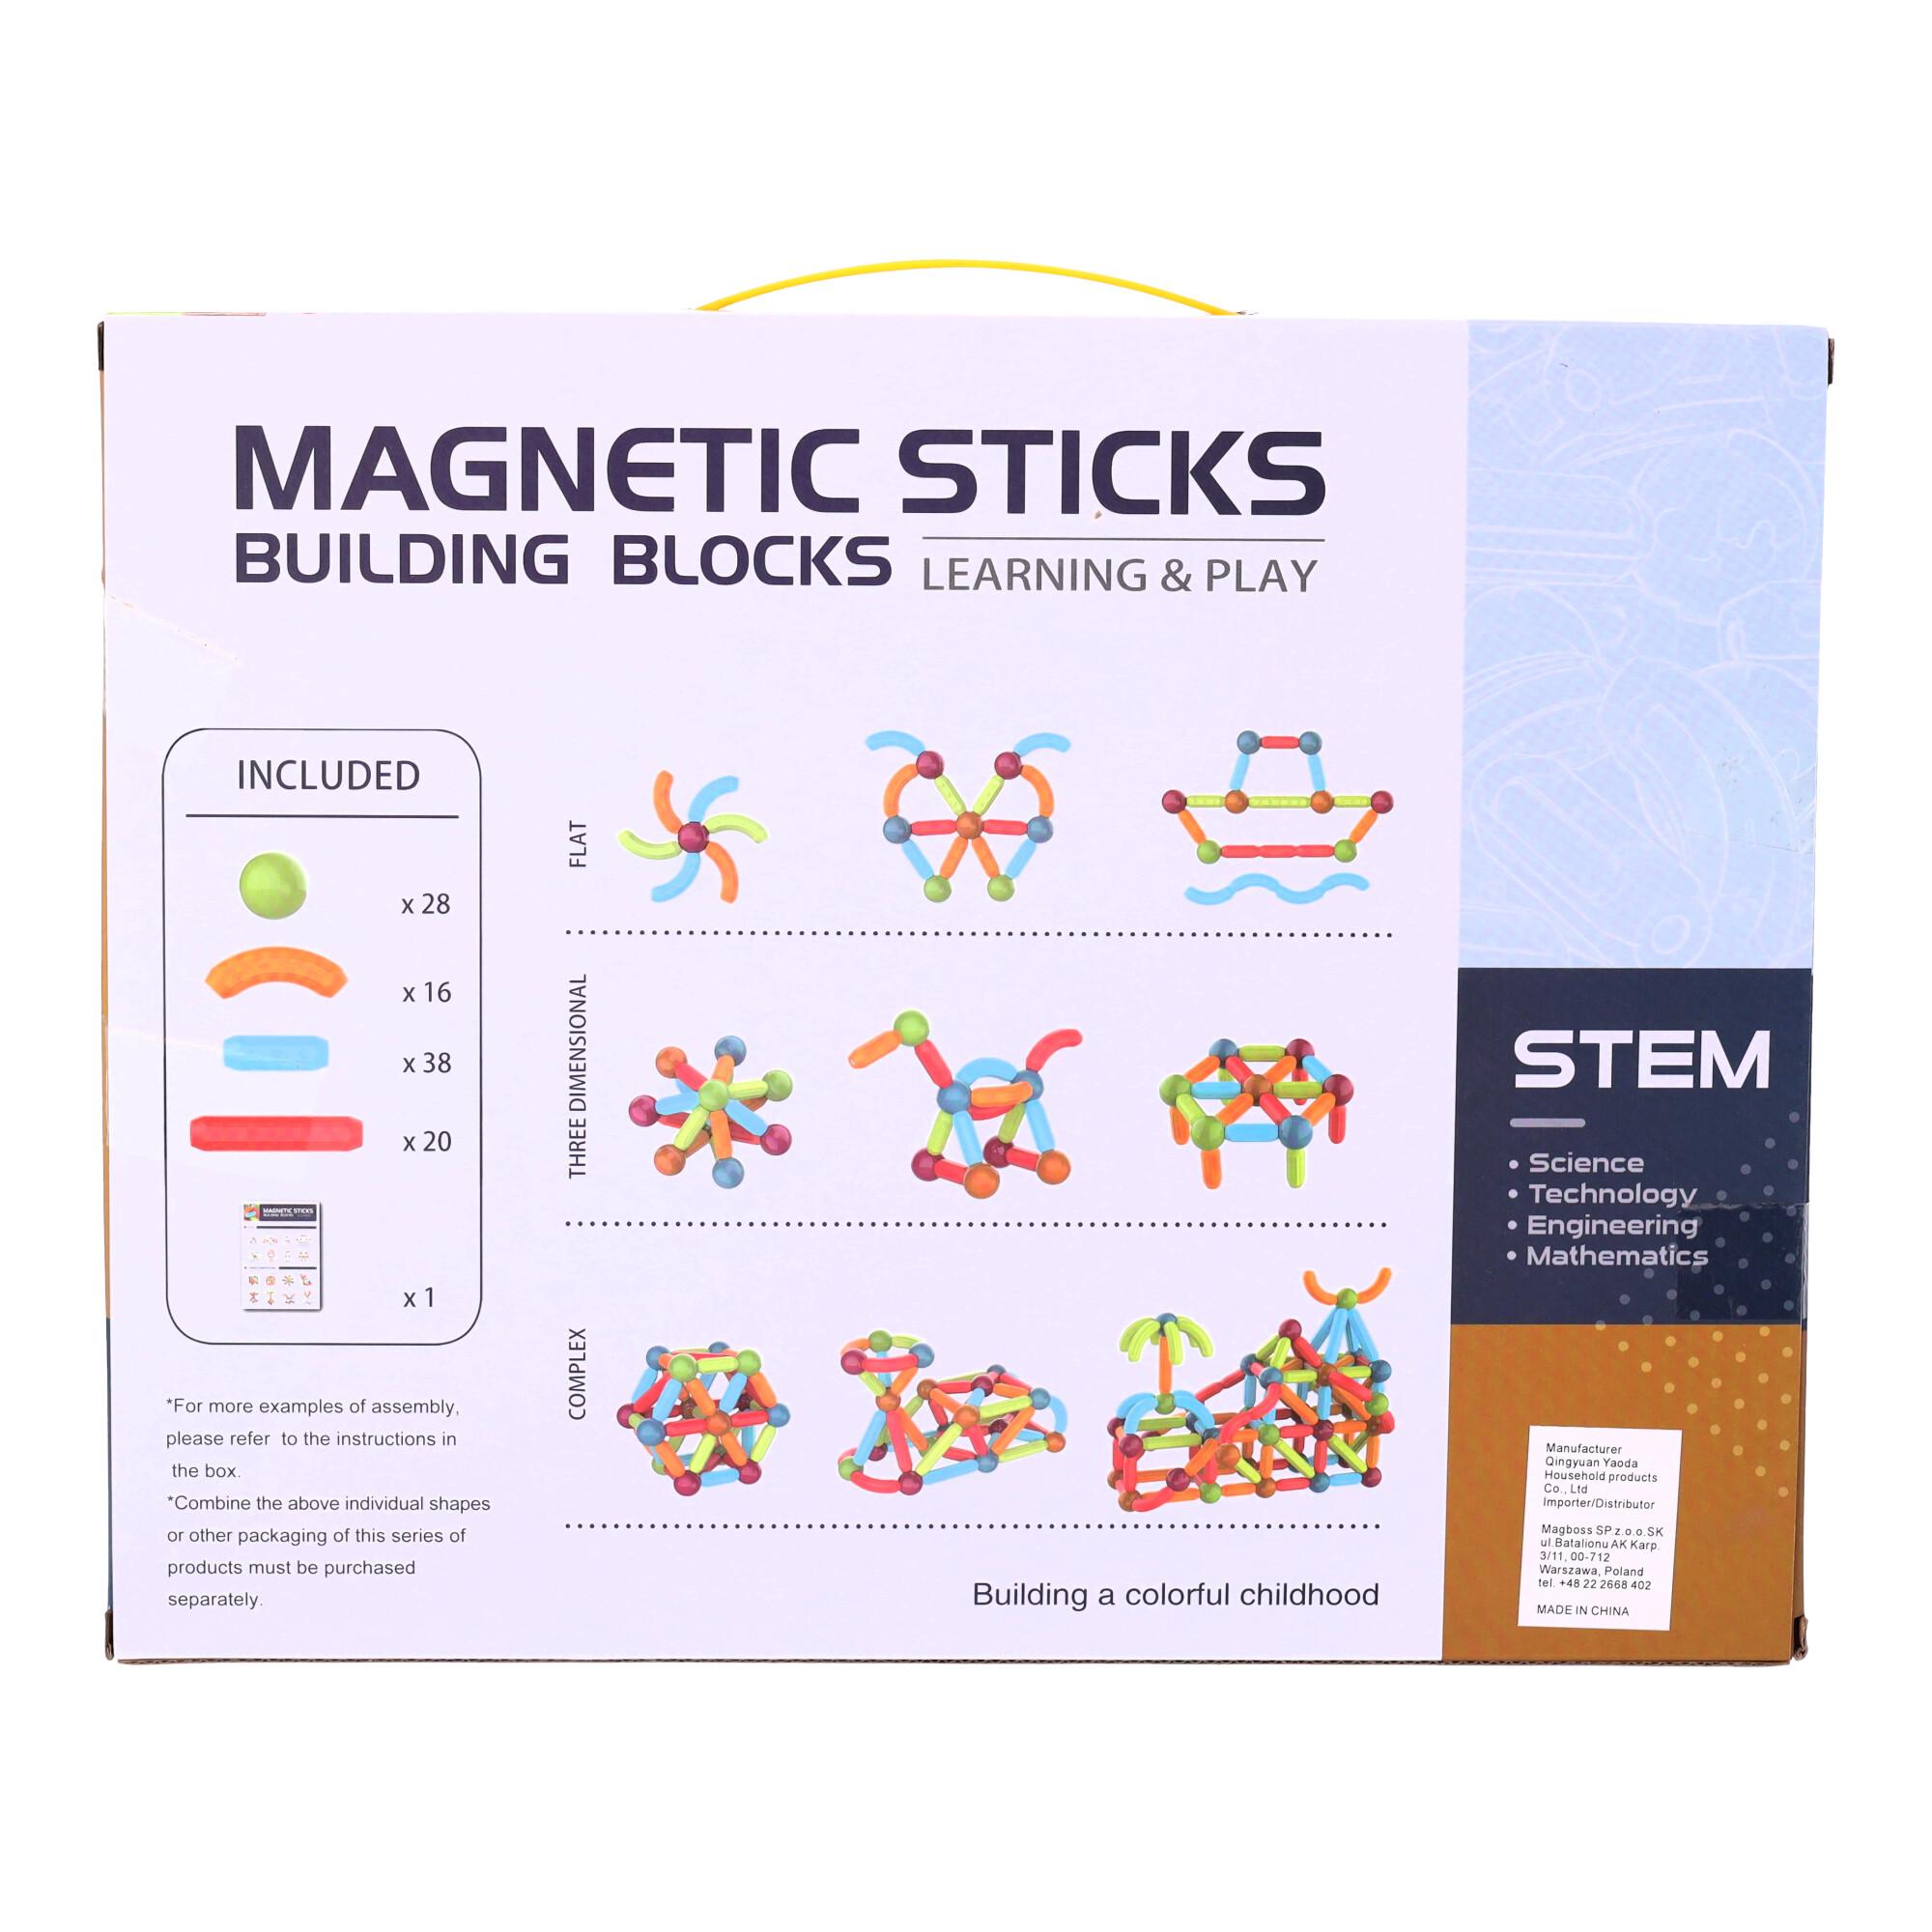 Magnetic building blocks - set of 102 elements